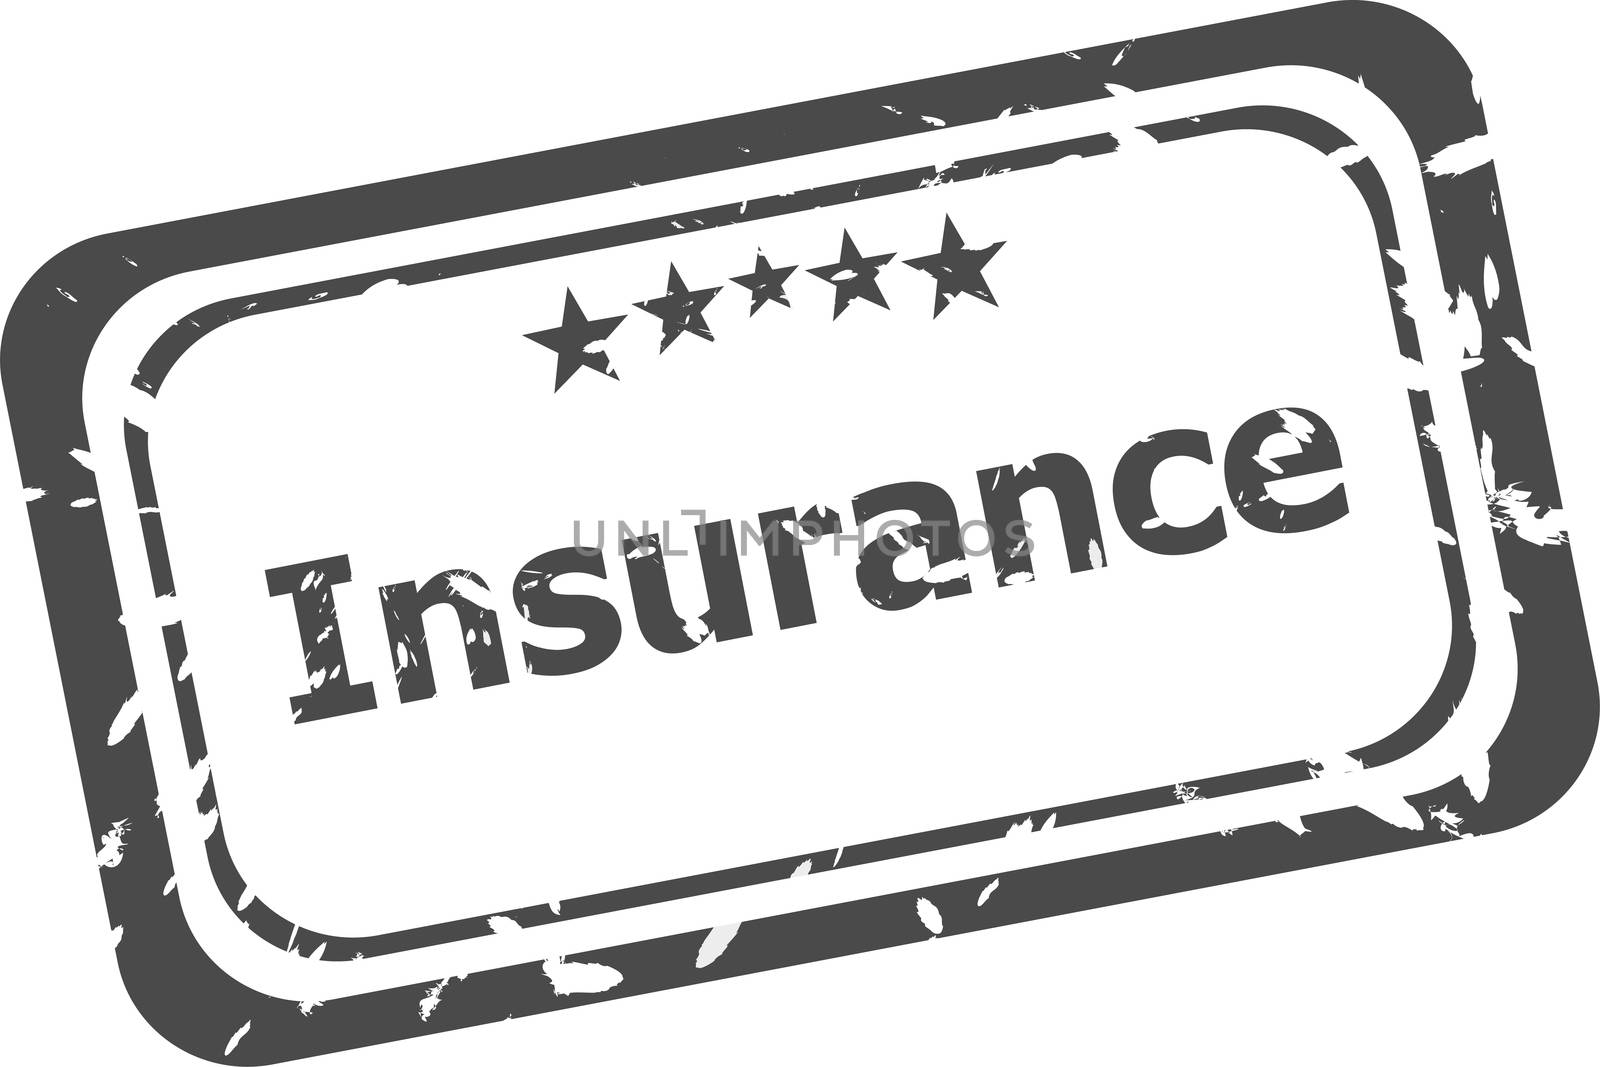 insurance grunge stamp isolated on white background